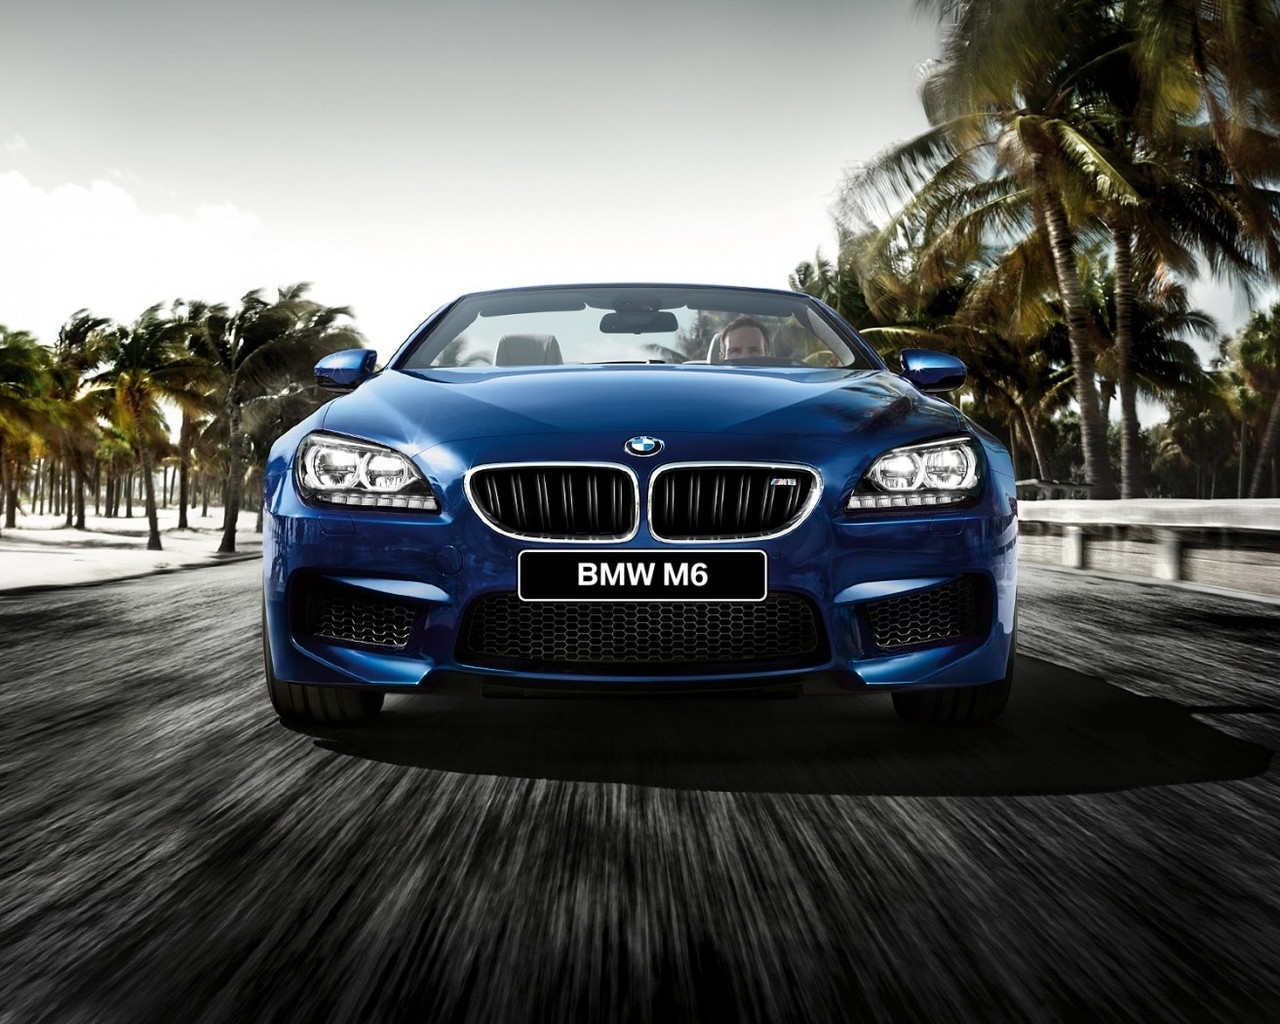 BMW M6 F12 Cabrio for 1280 x 1024 resolution